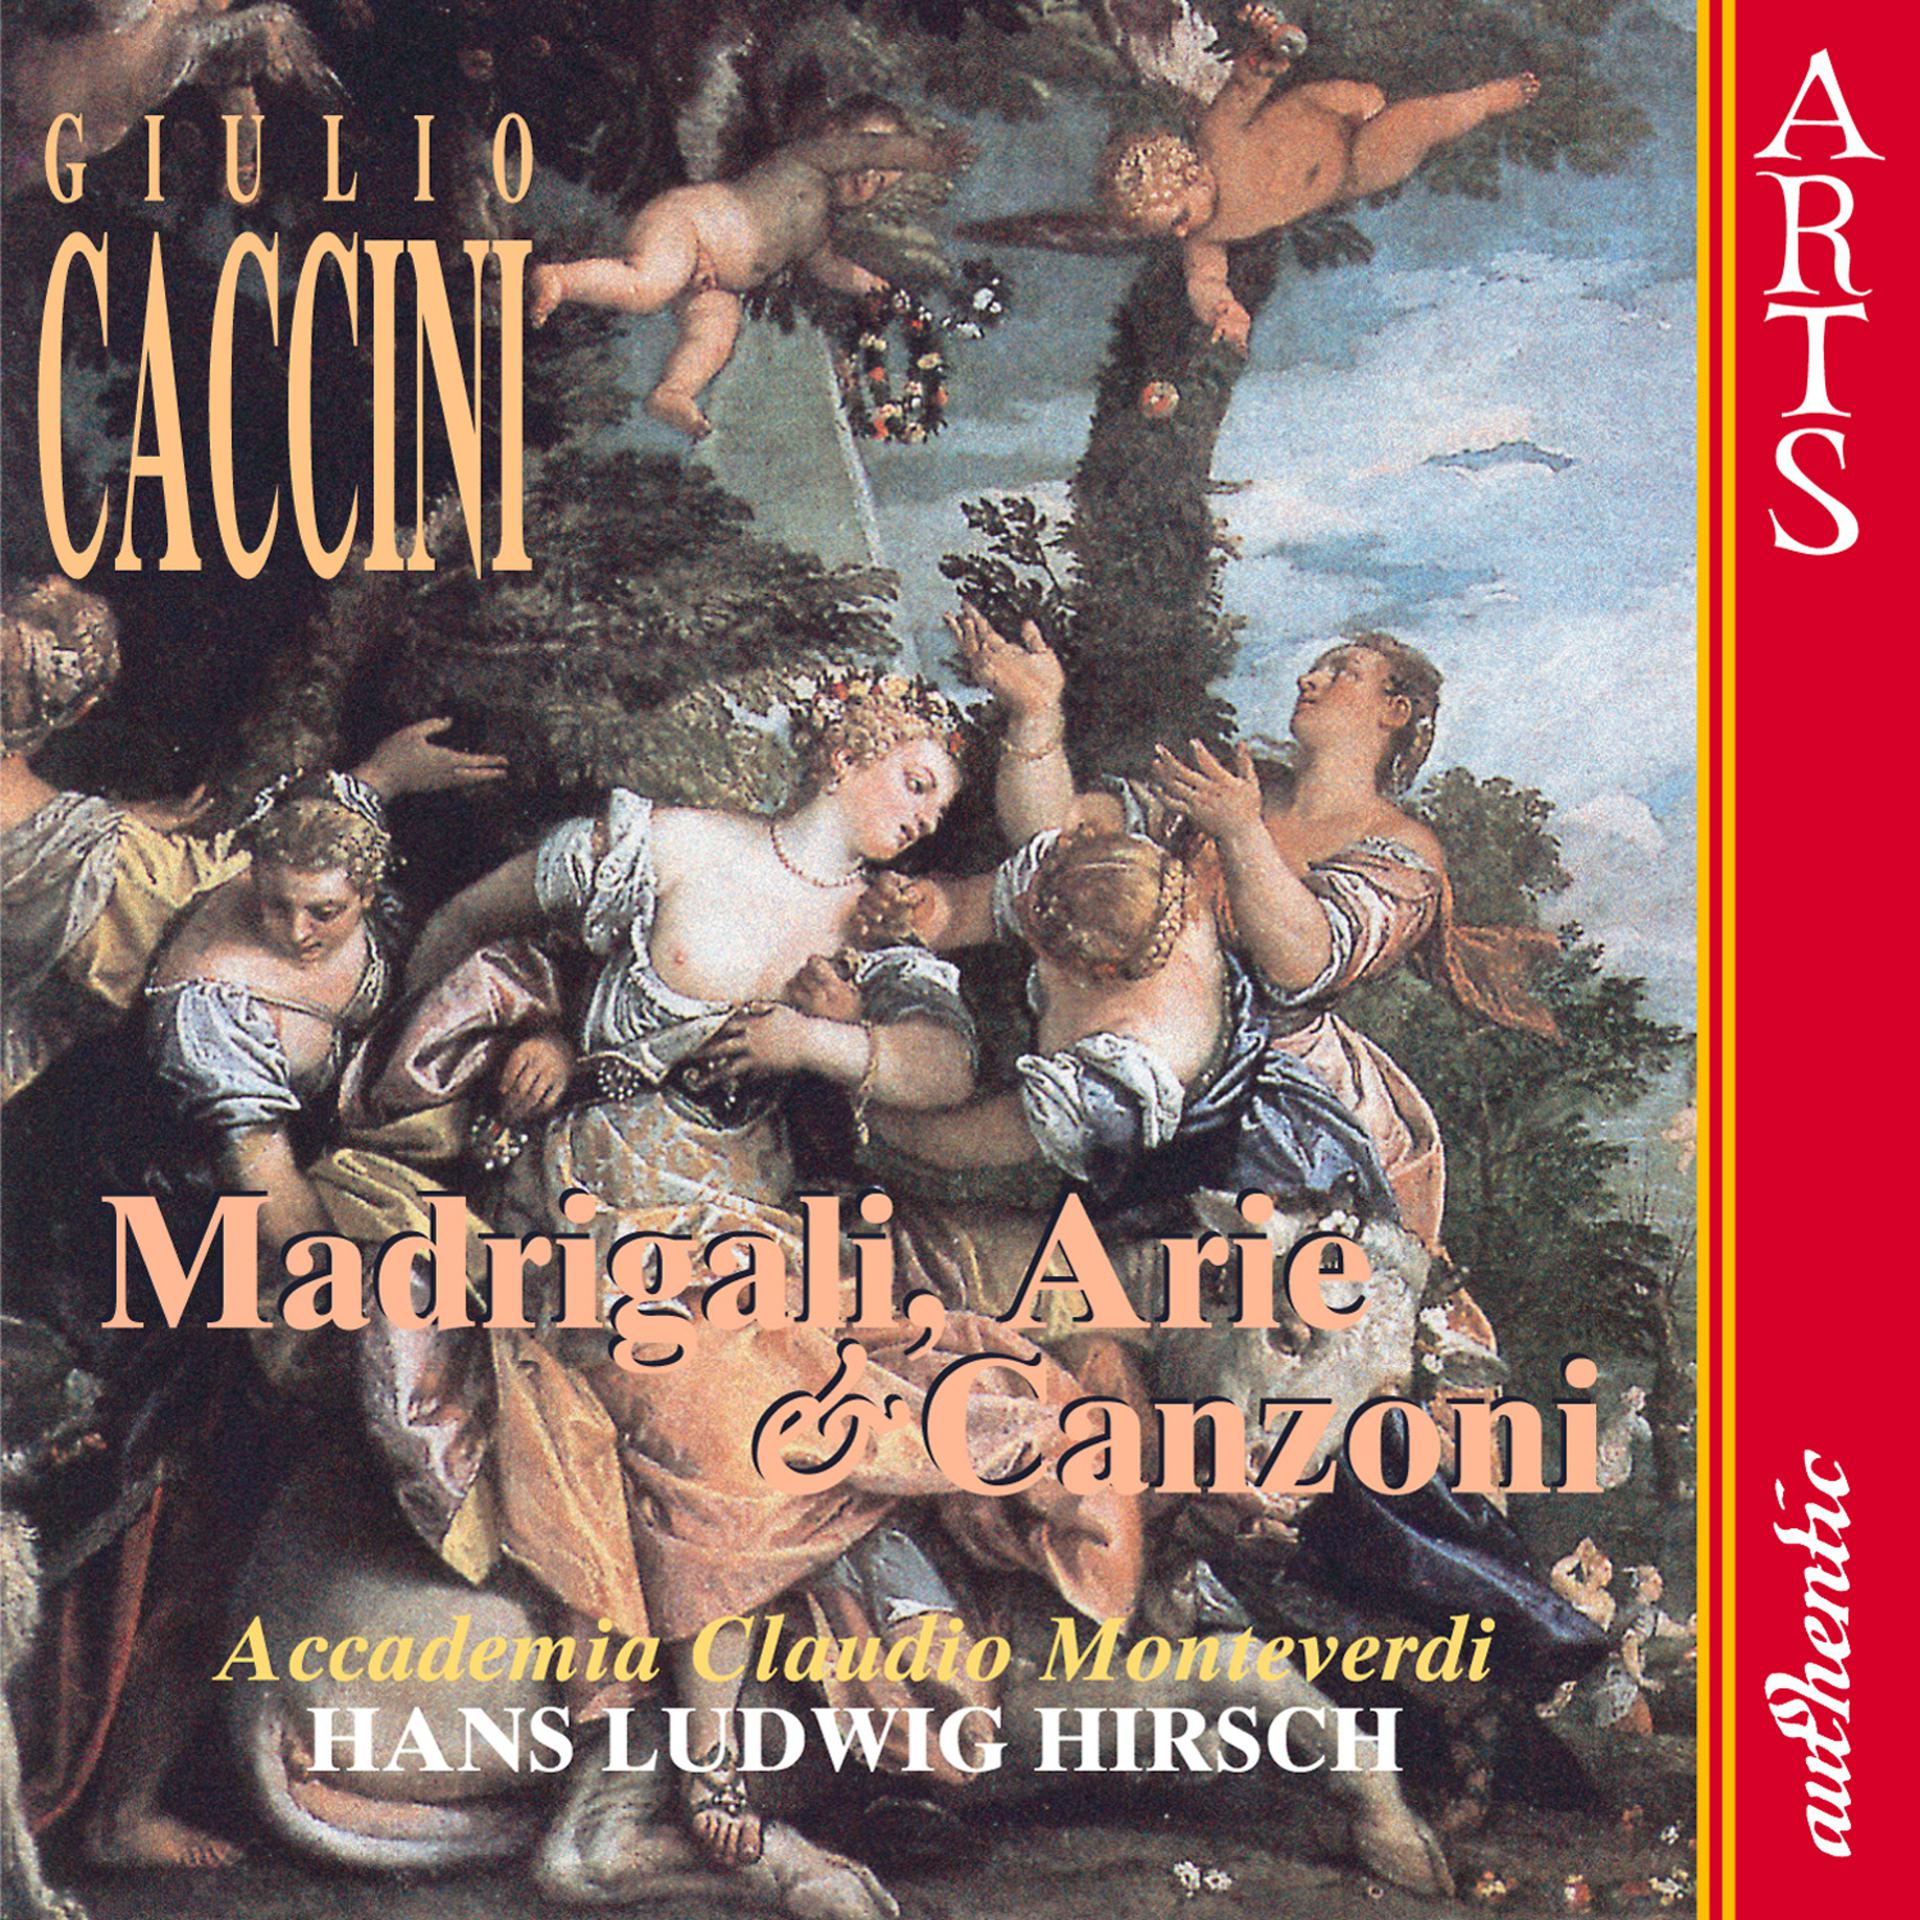 Постер к треку Accademia Claudio Monteverdi, Hans Ludwig Hirsch, Tania d'Althann, Paolo Cherici - Canzonetta: Aur'Amorosa (Caccini)